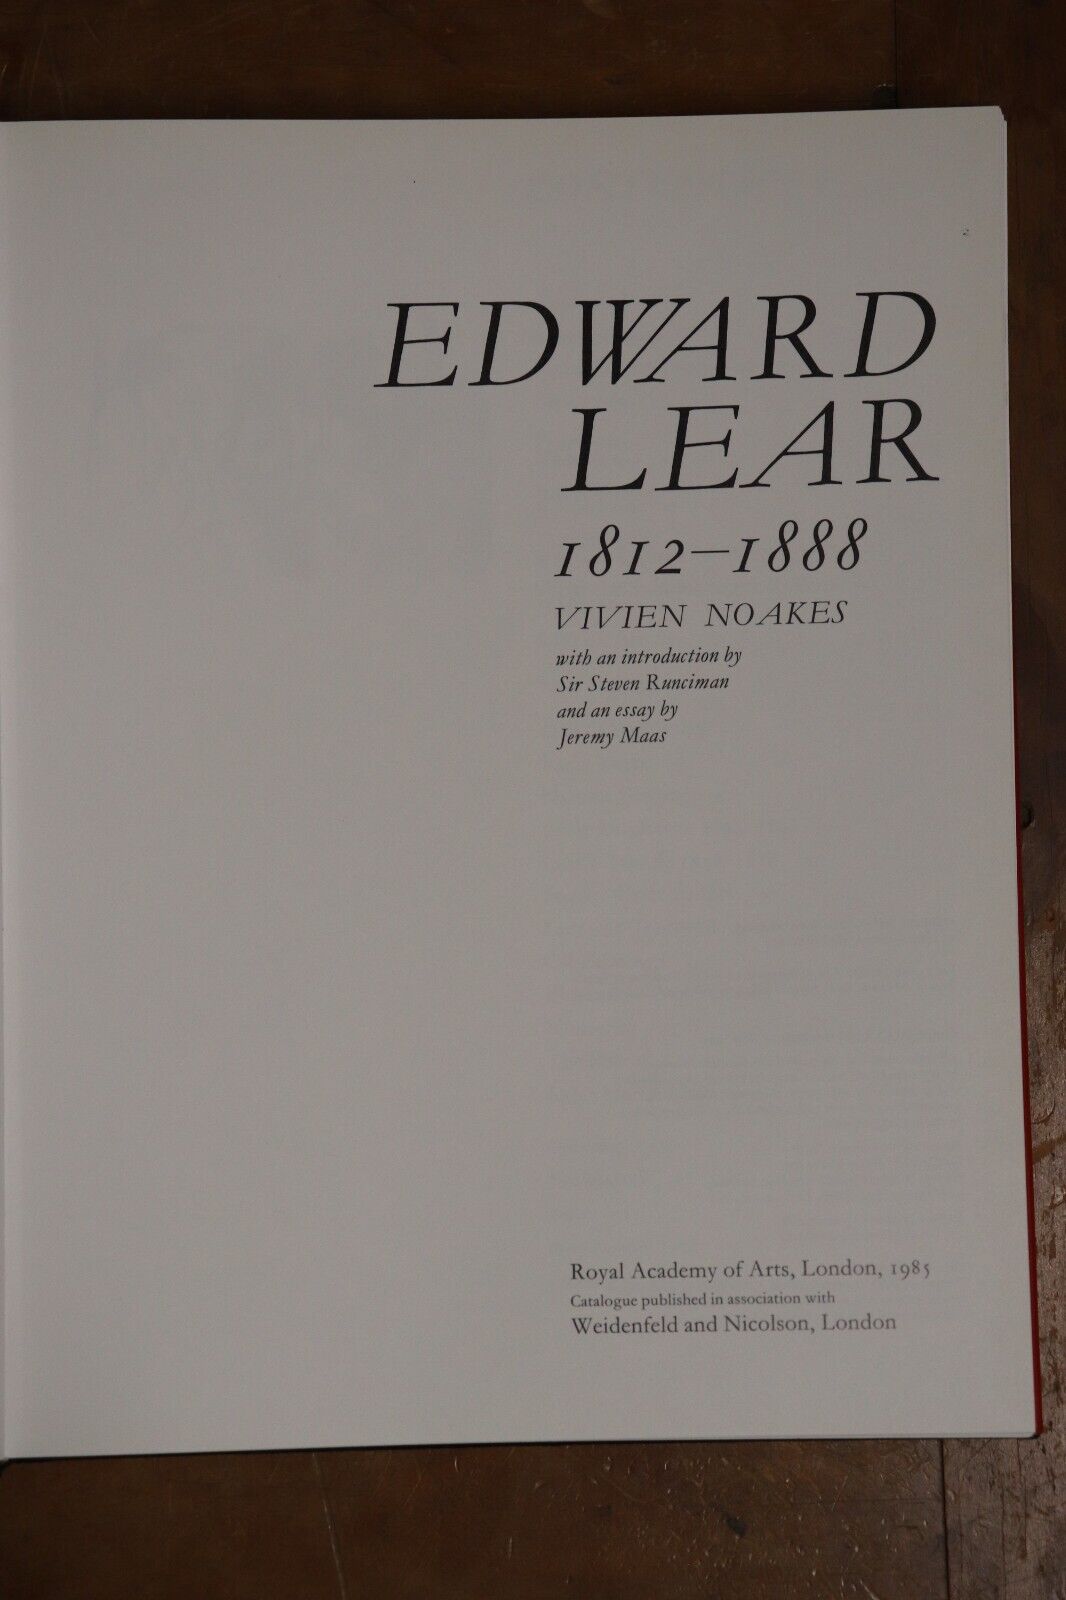 Edward Lear: 1812 - 1888 by Vivien Noakes - 1985 - 1st Edition - Art Book - 0